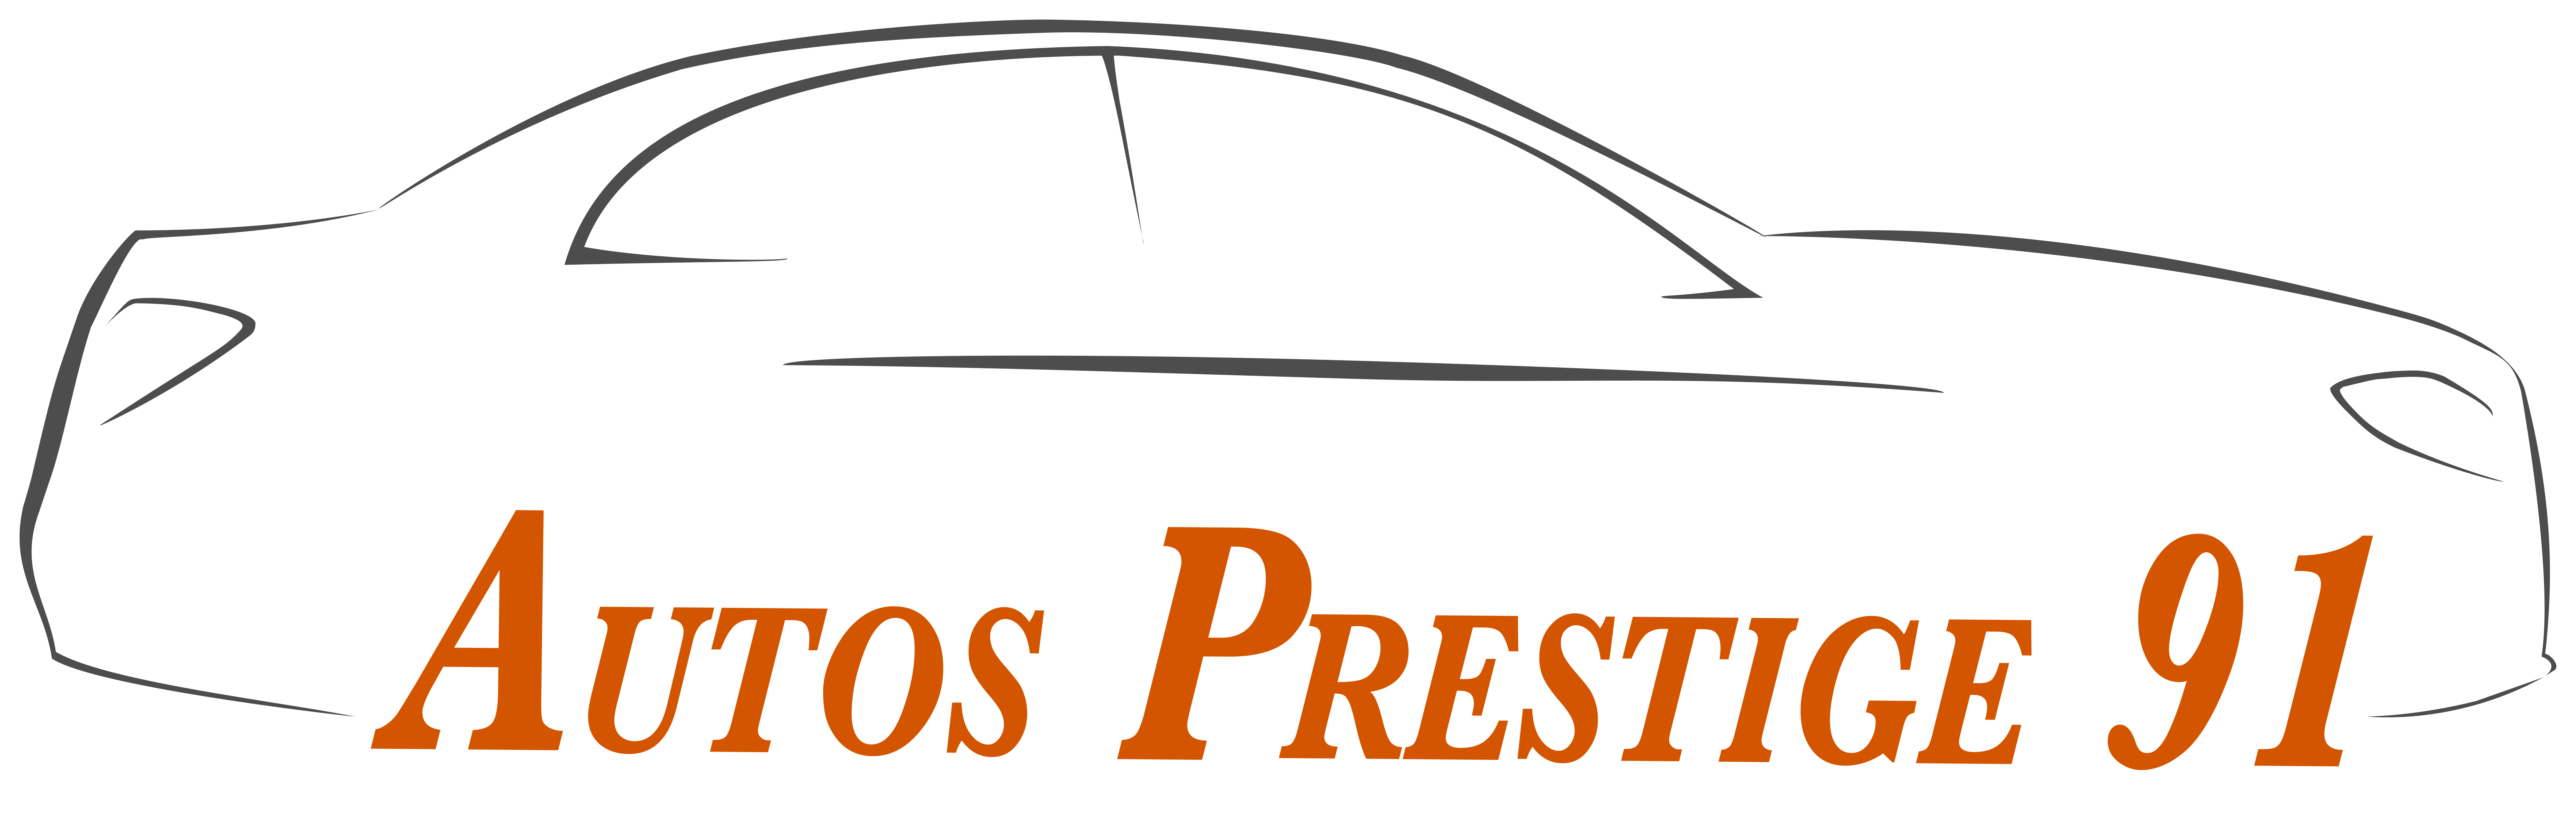 Autos Prestige 91 logo